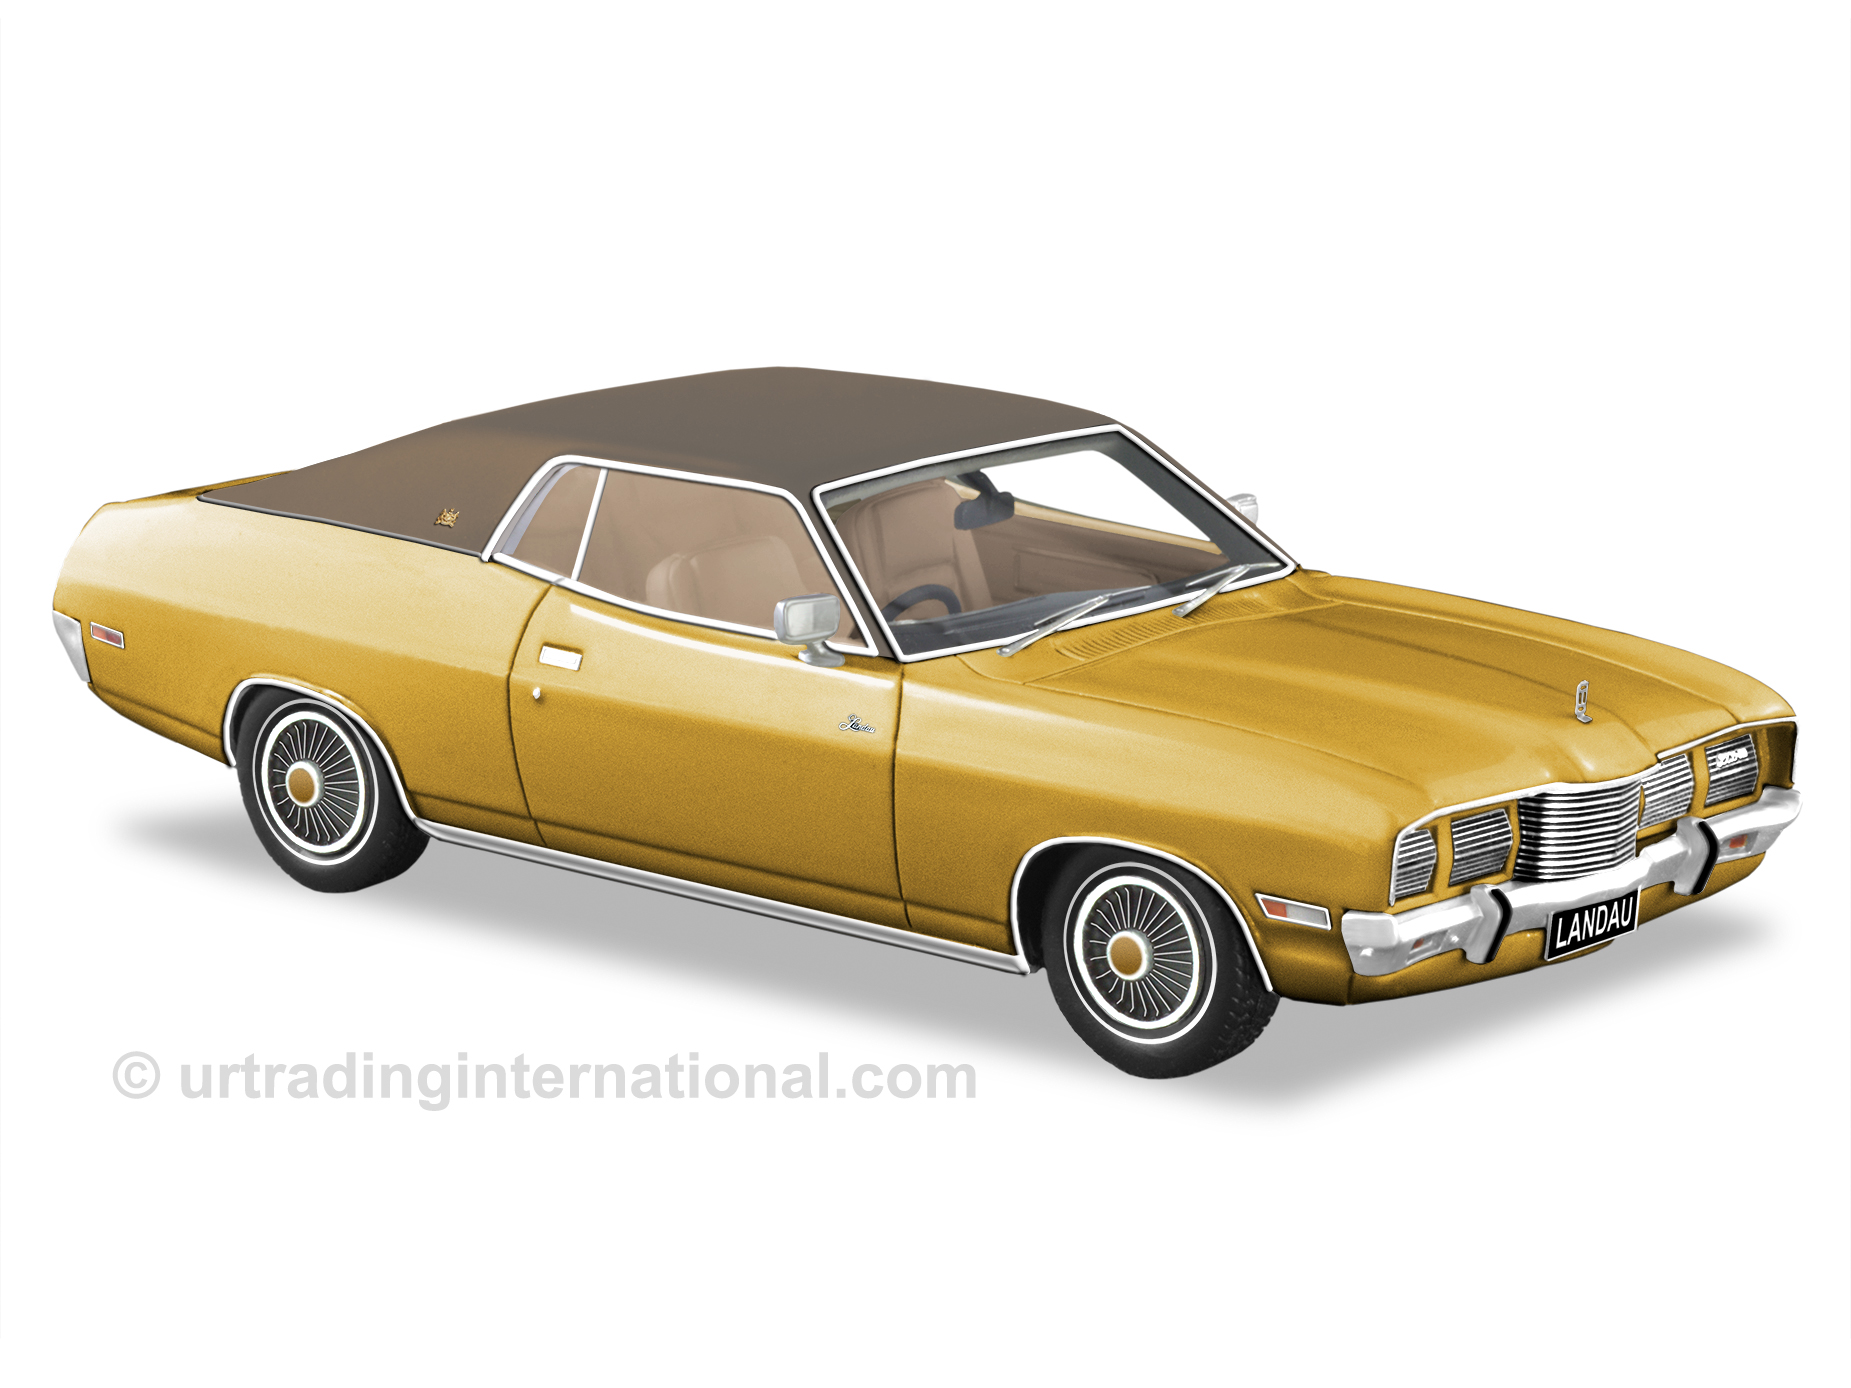 1975 Ford Landau – Tropic Gold.